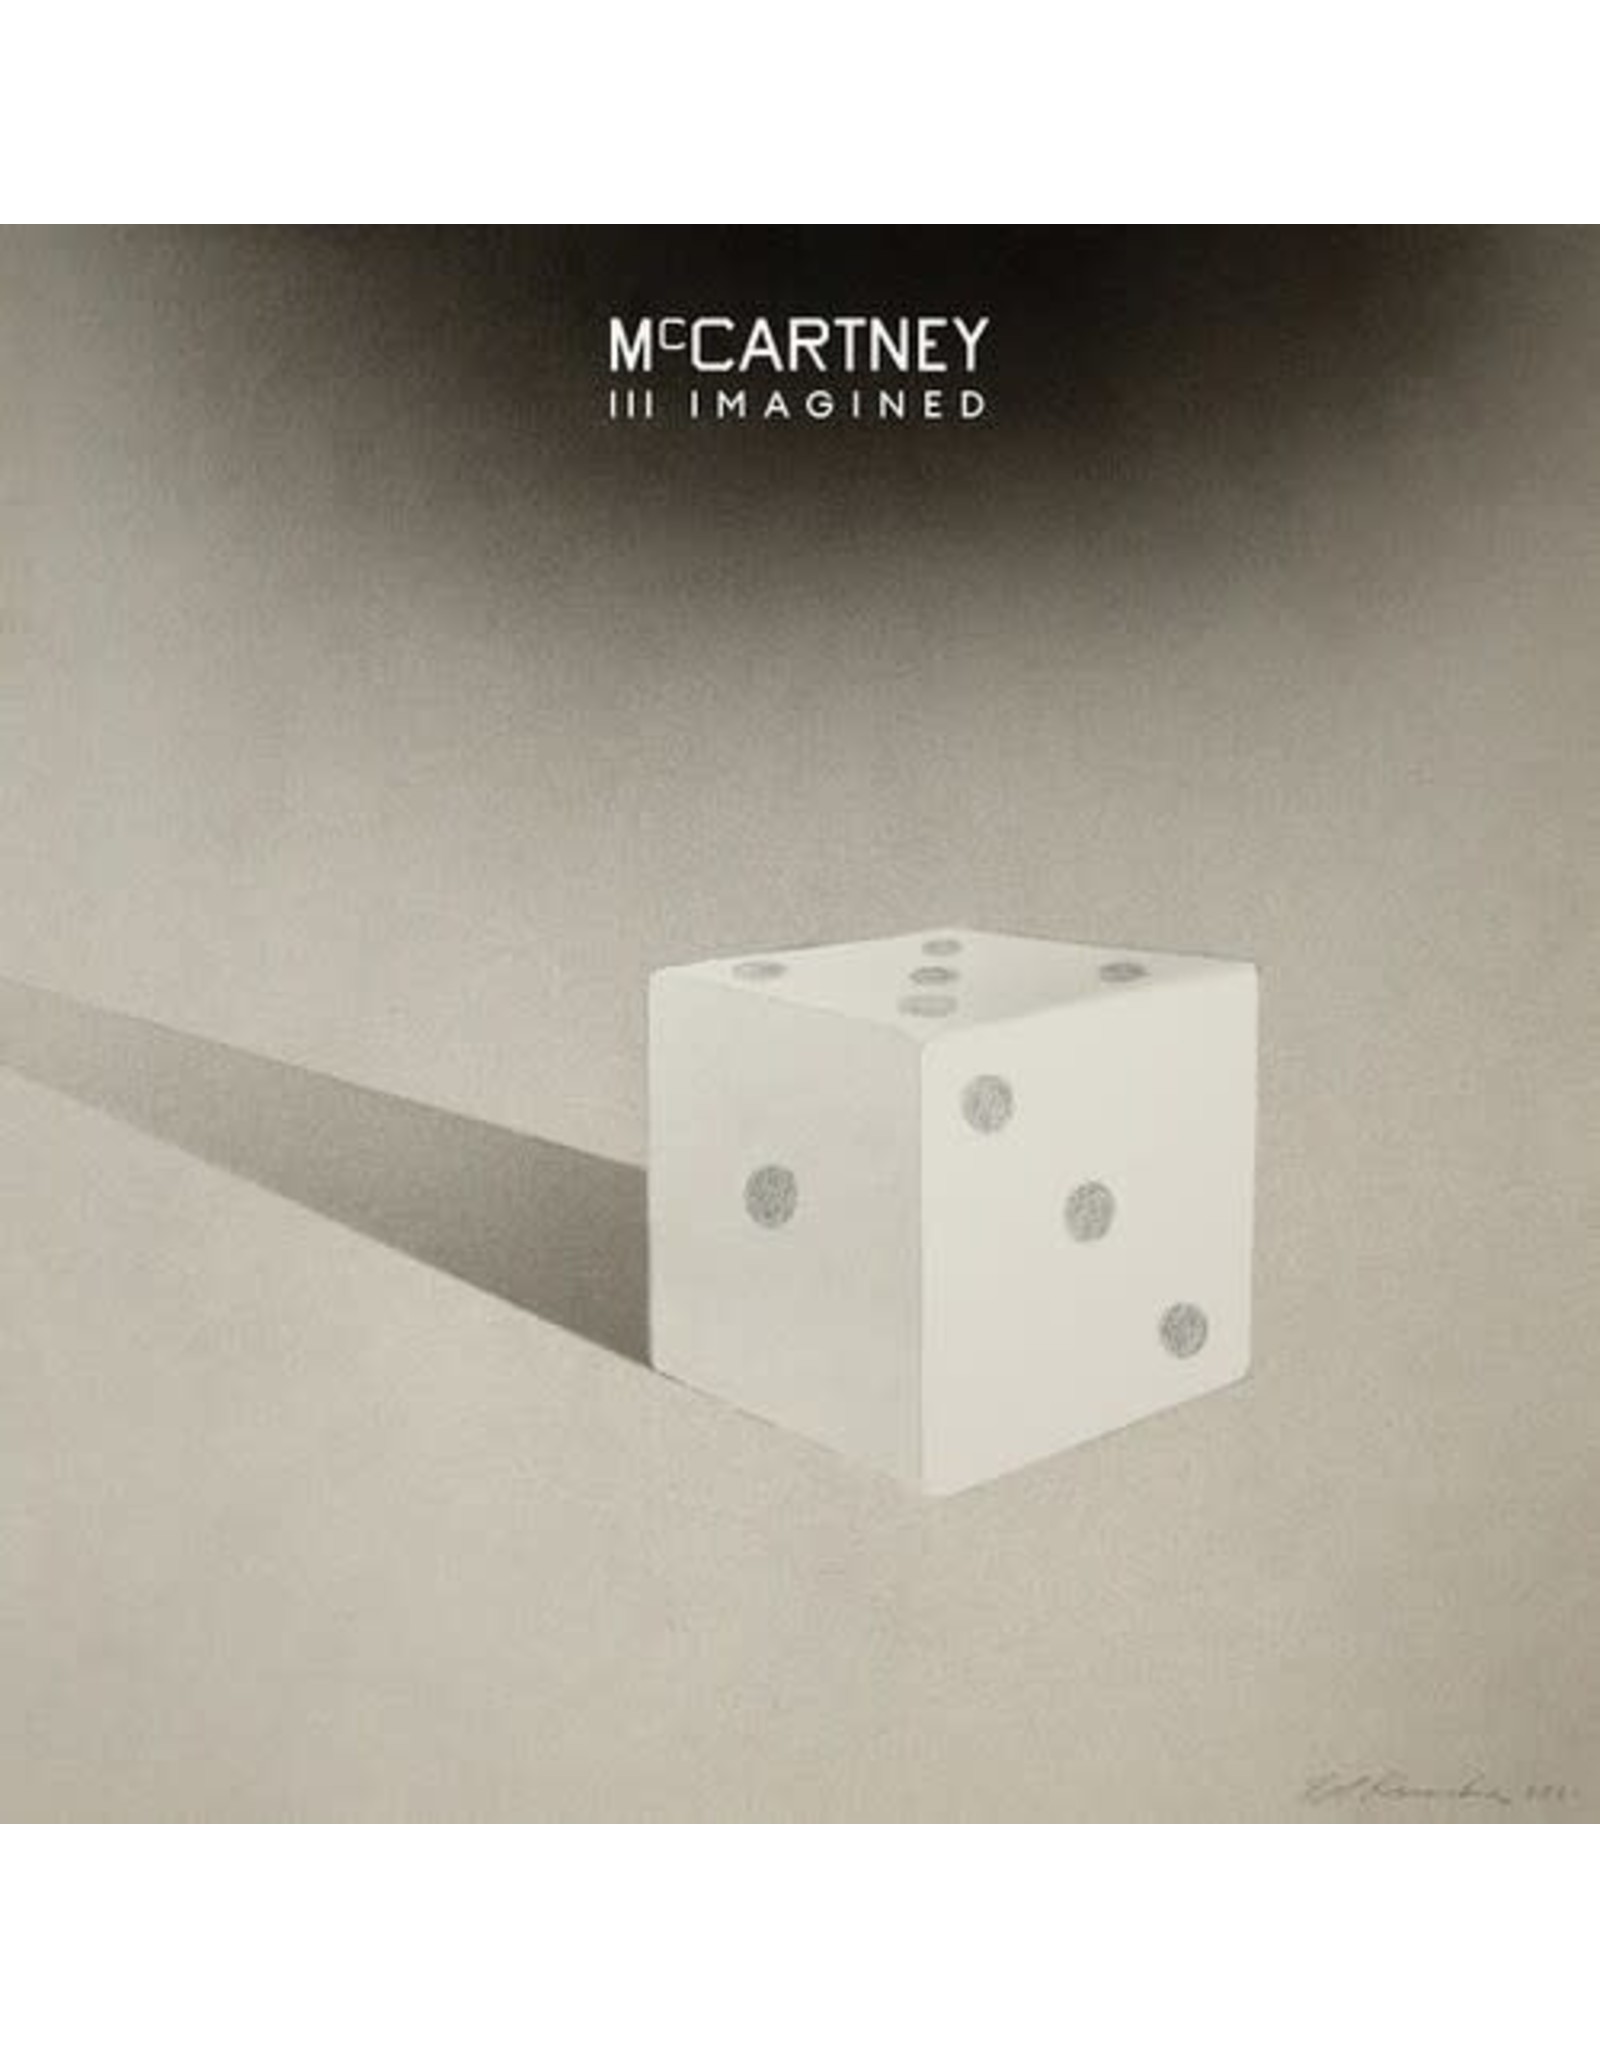 New Vinyl Paul McCartney - McCartney III Imagined 2LP